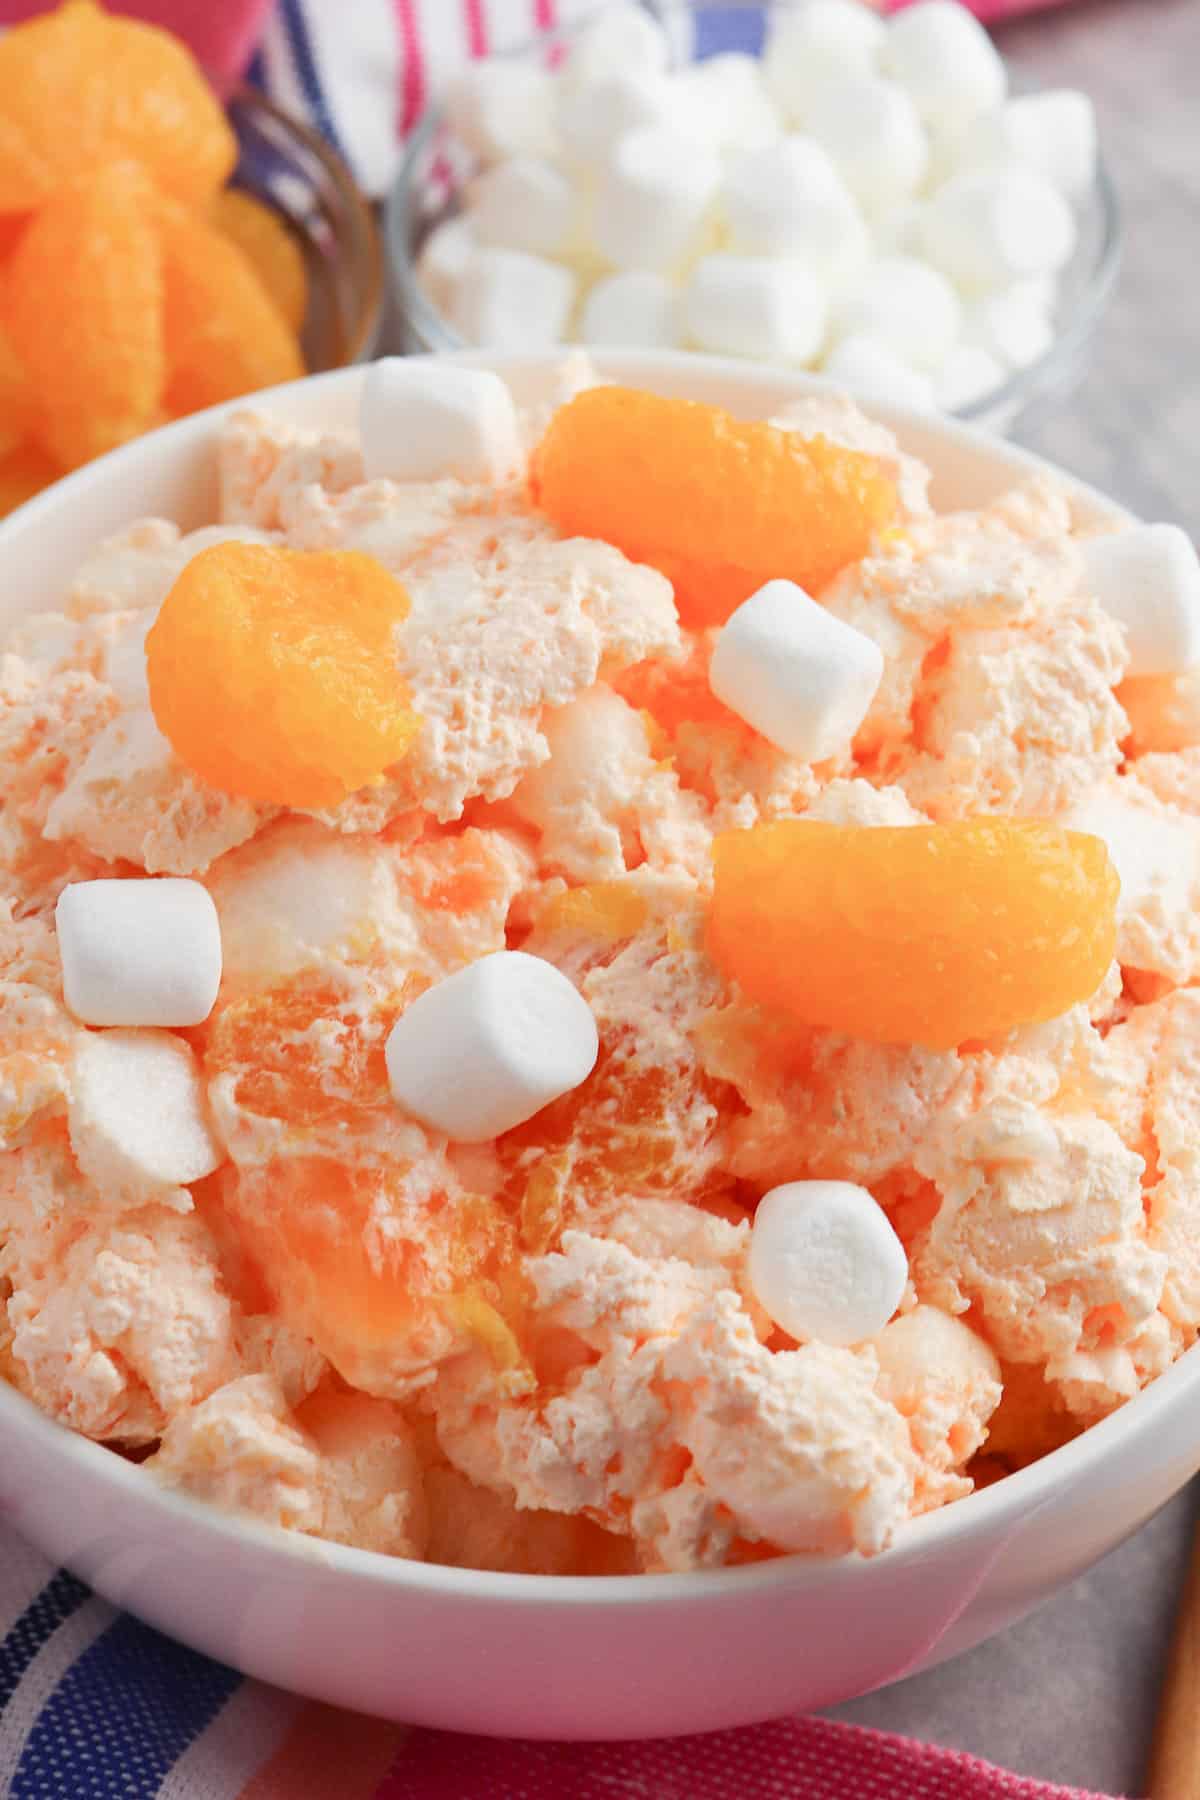 Bowl of mandarin orange jello salad with marshmallows.